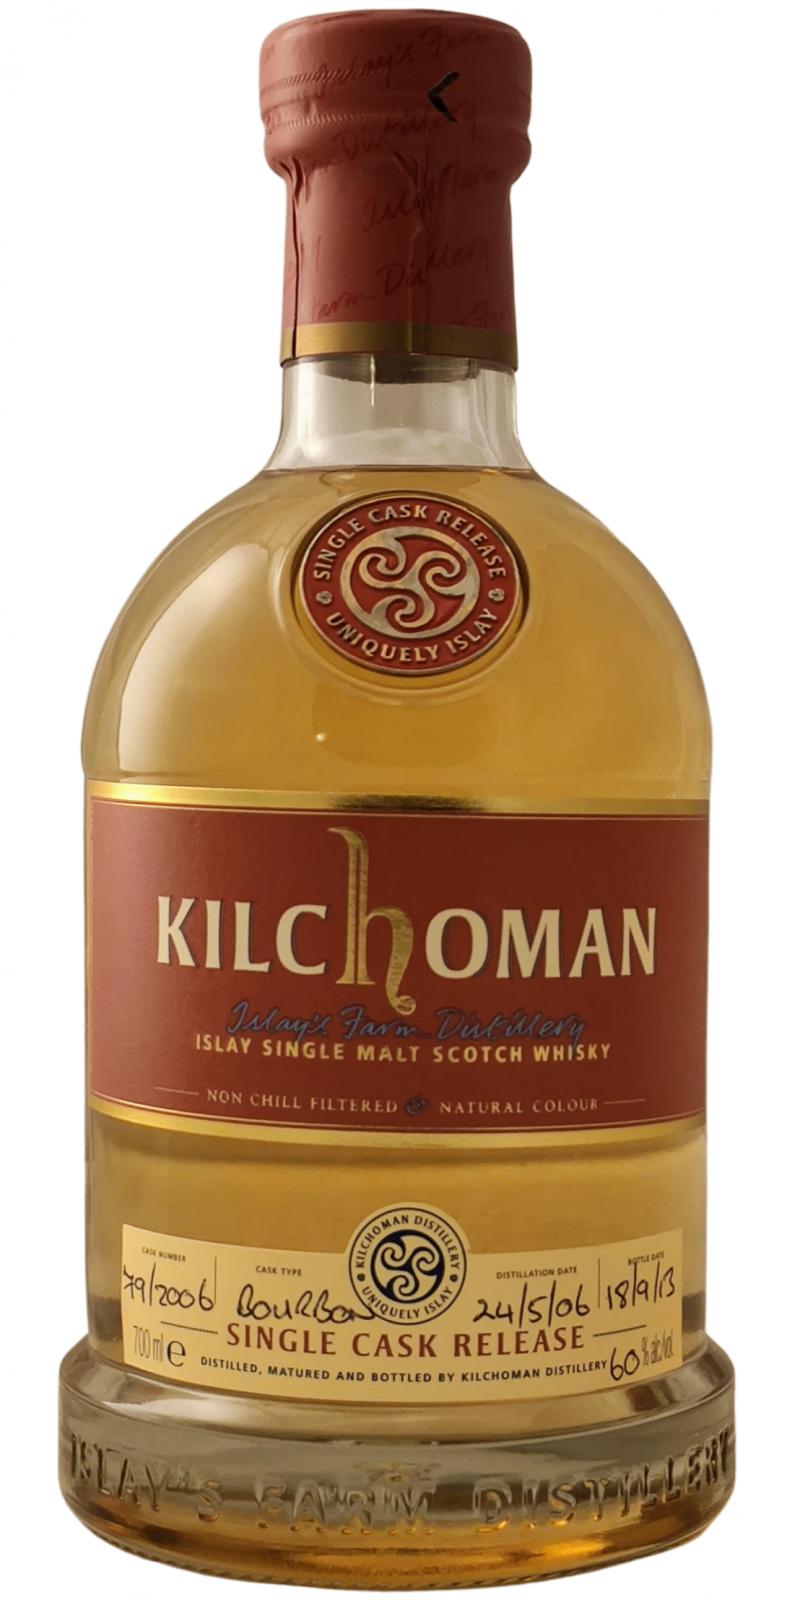 Kilchoman 2006 Single Cask Release Bourbon 79 2006 60% 700ml